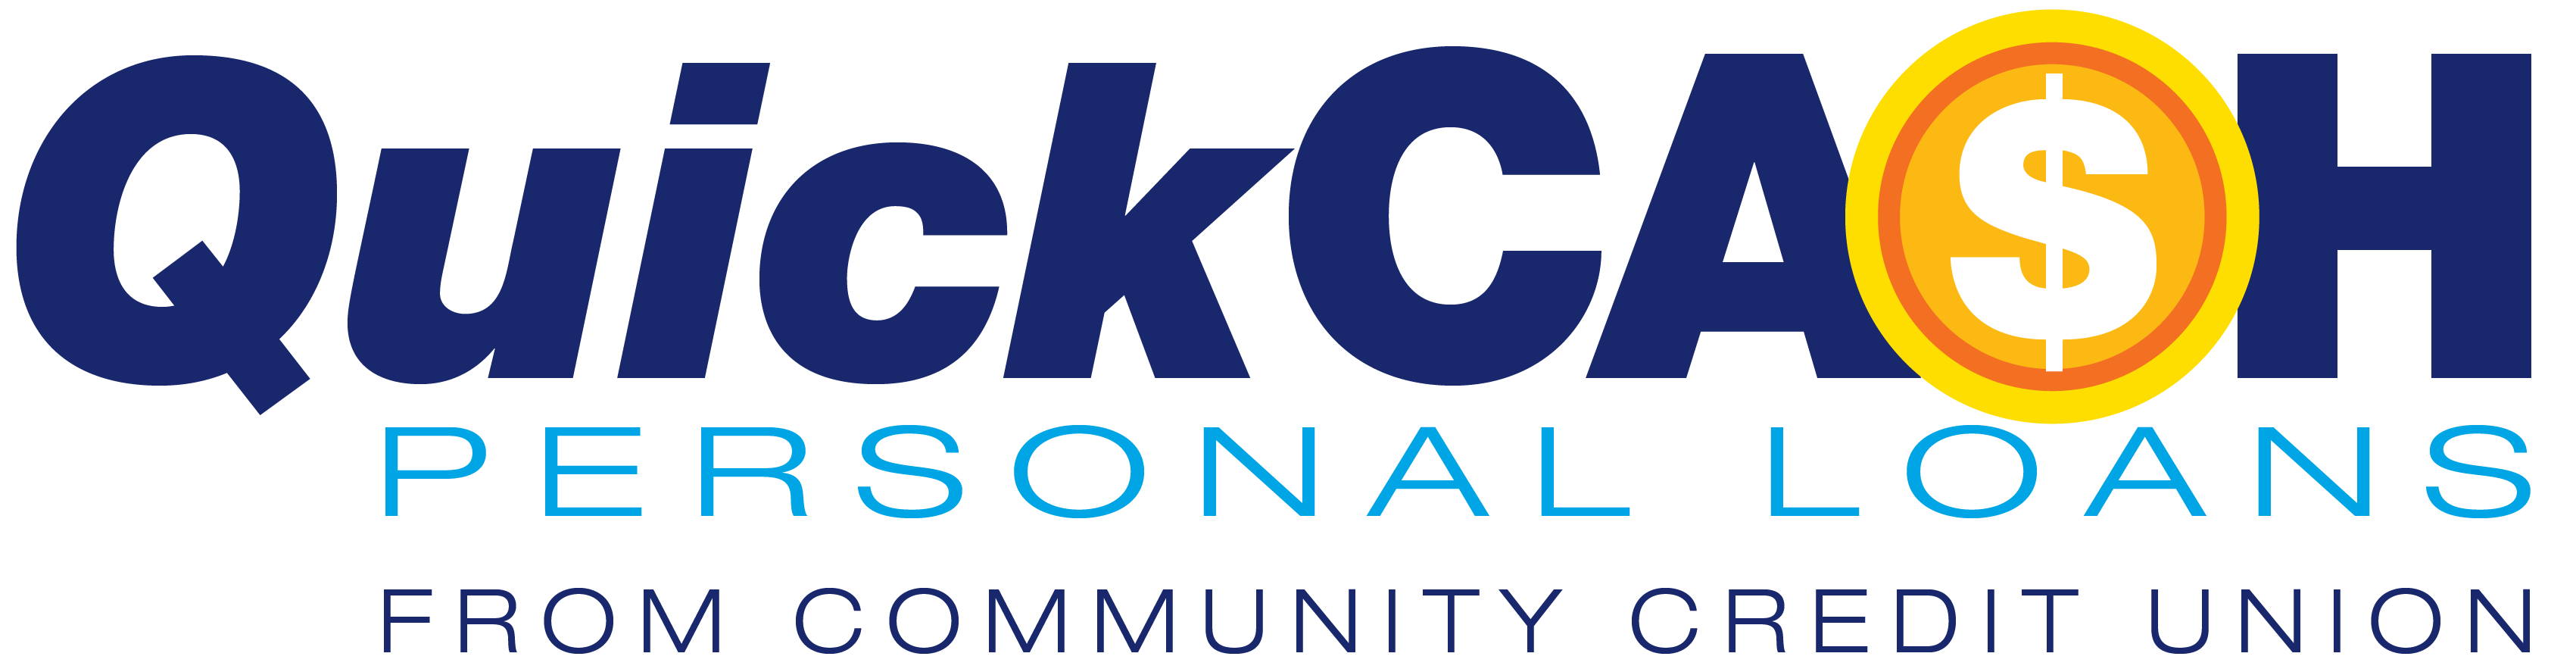 Cash Loan Logo - Quick Cash Personal Loans - Community Credit Union Florida Blog